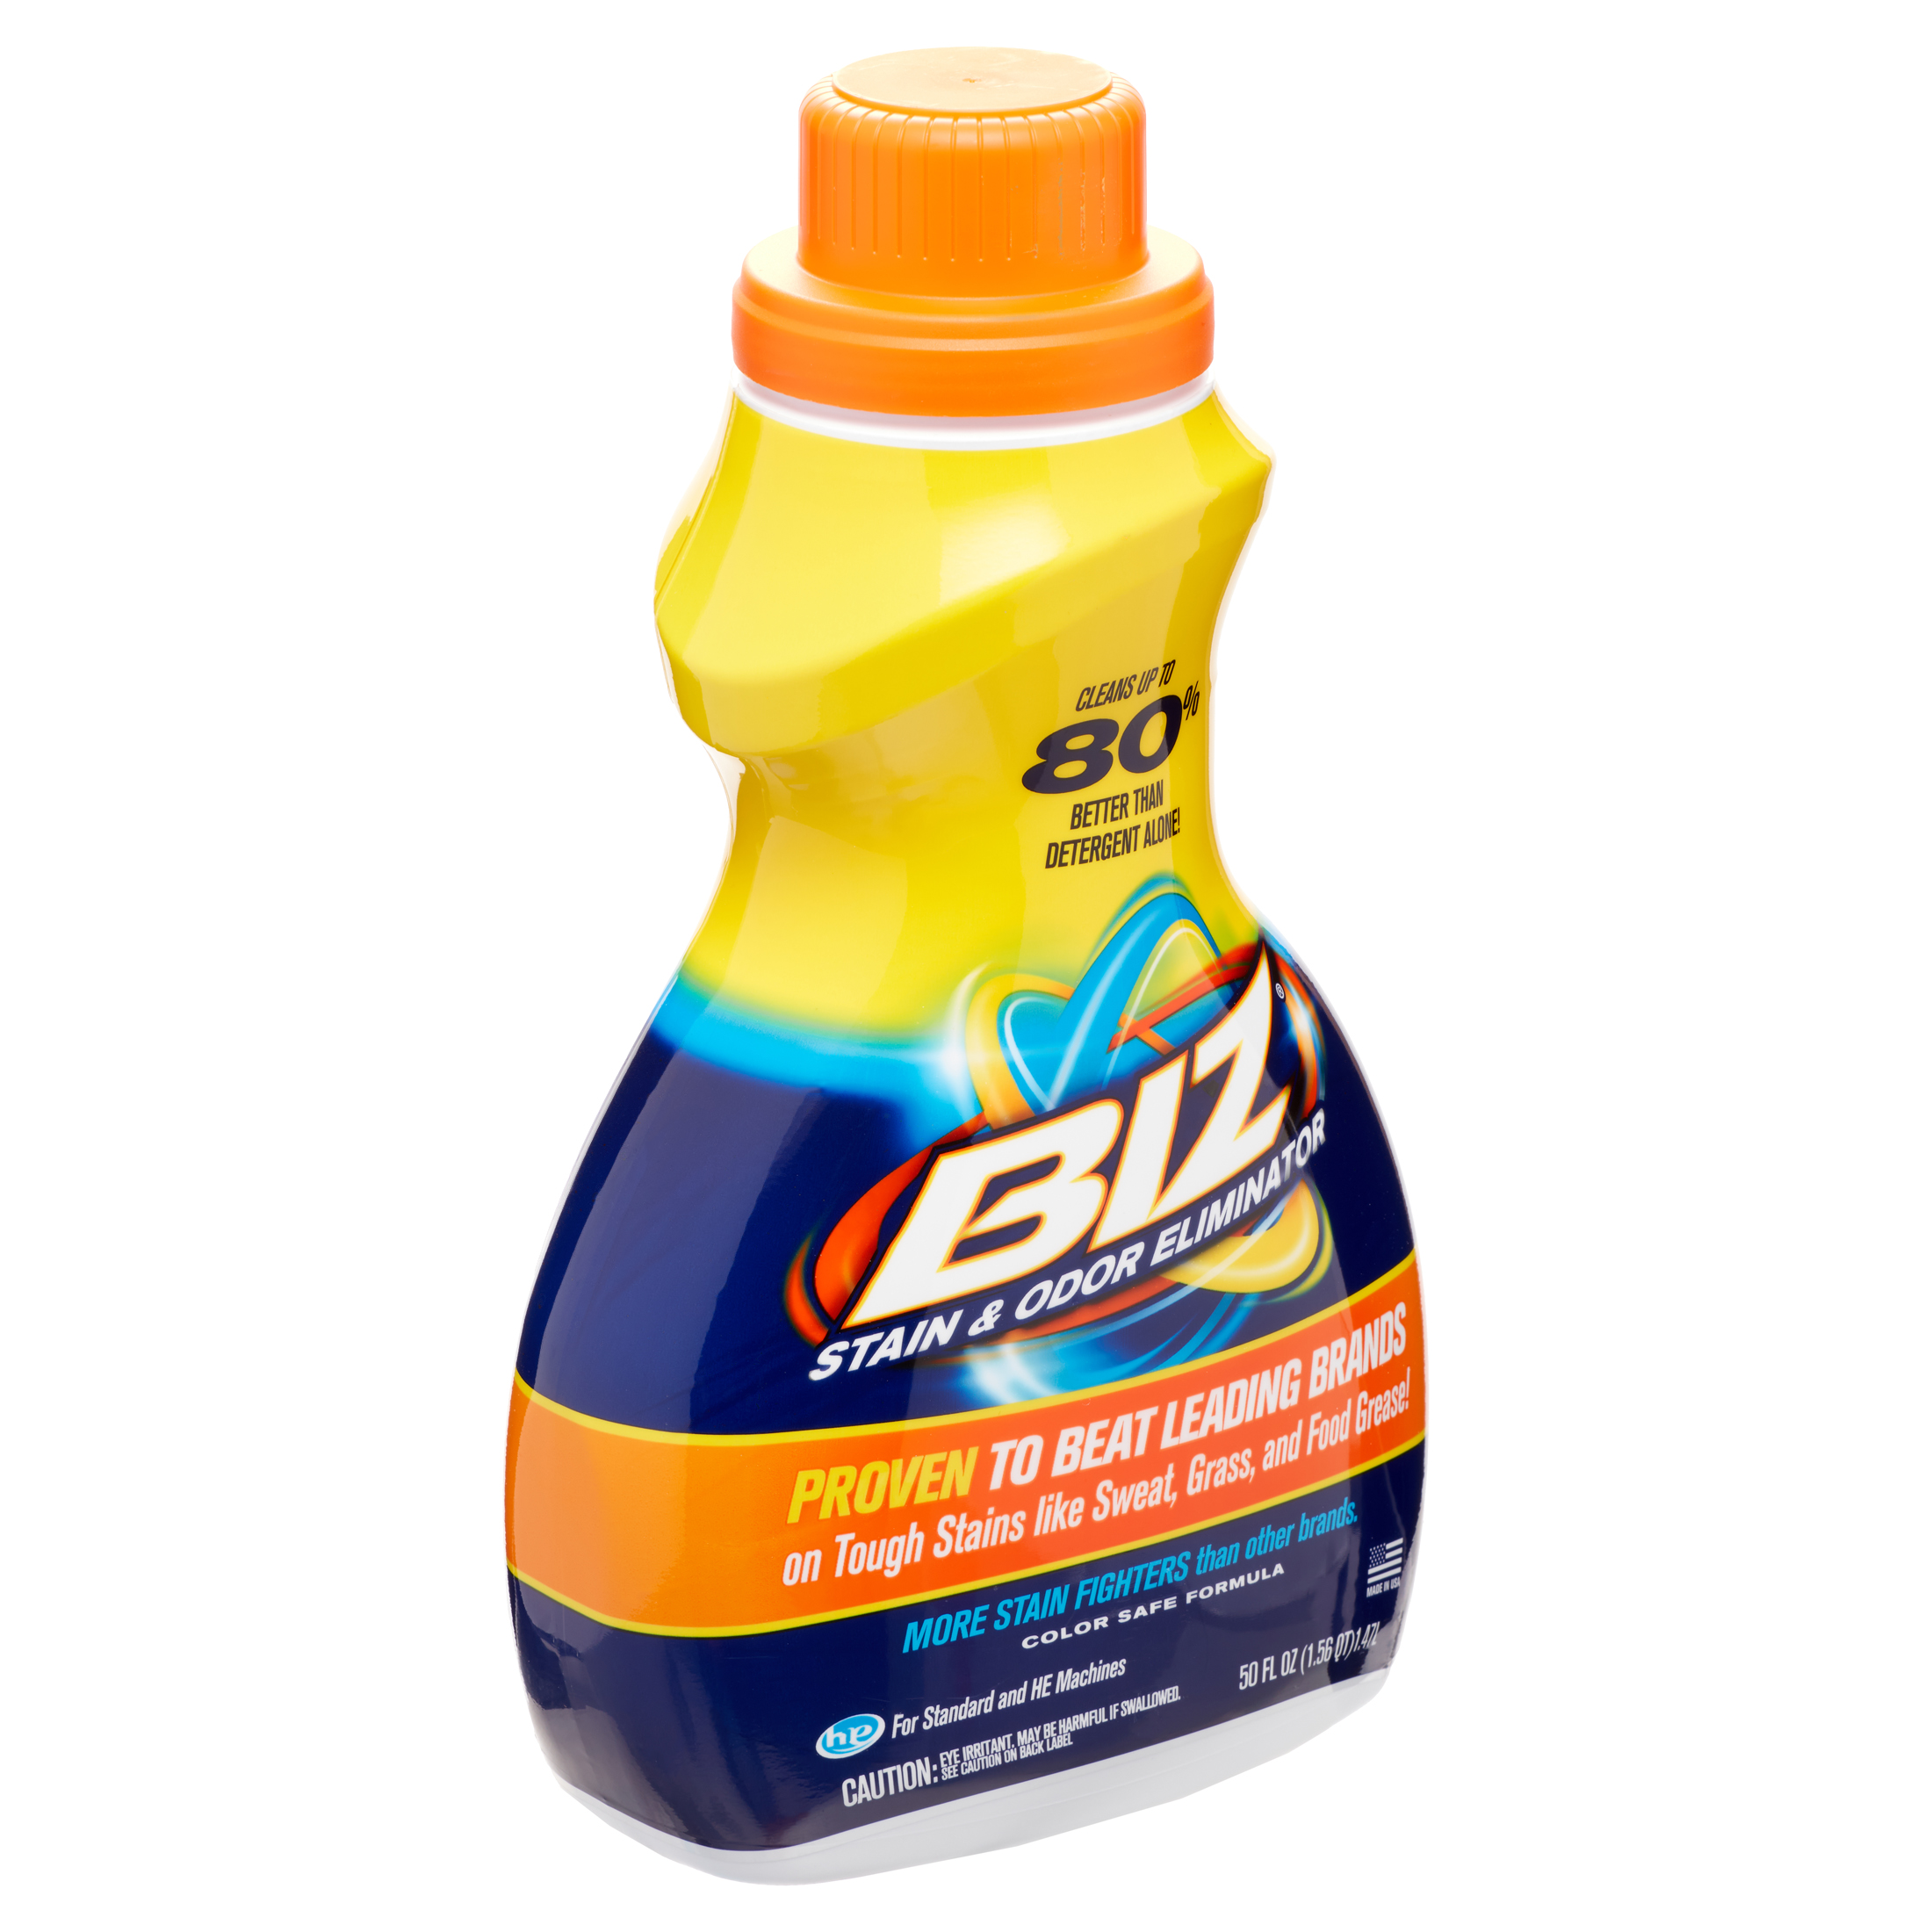 Biz Stain & Odor Eliminator Liquid, 50 Fluid Ounce - image 7 of 8